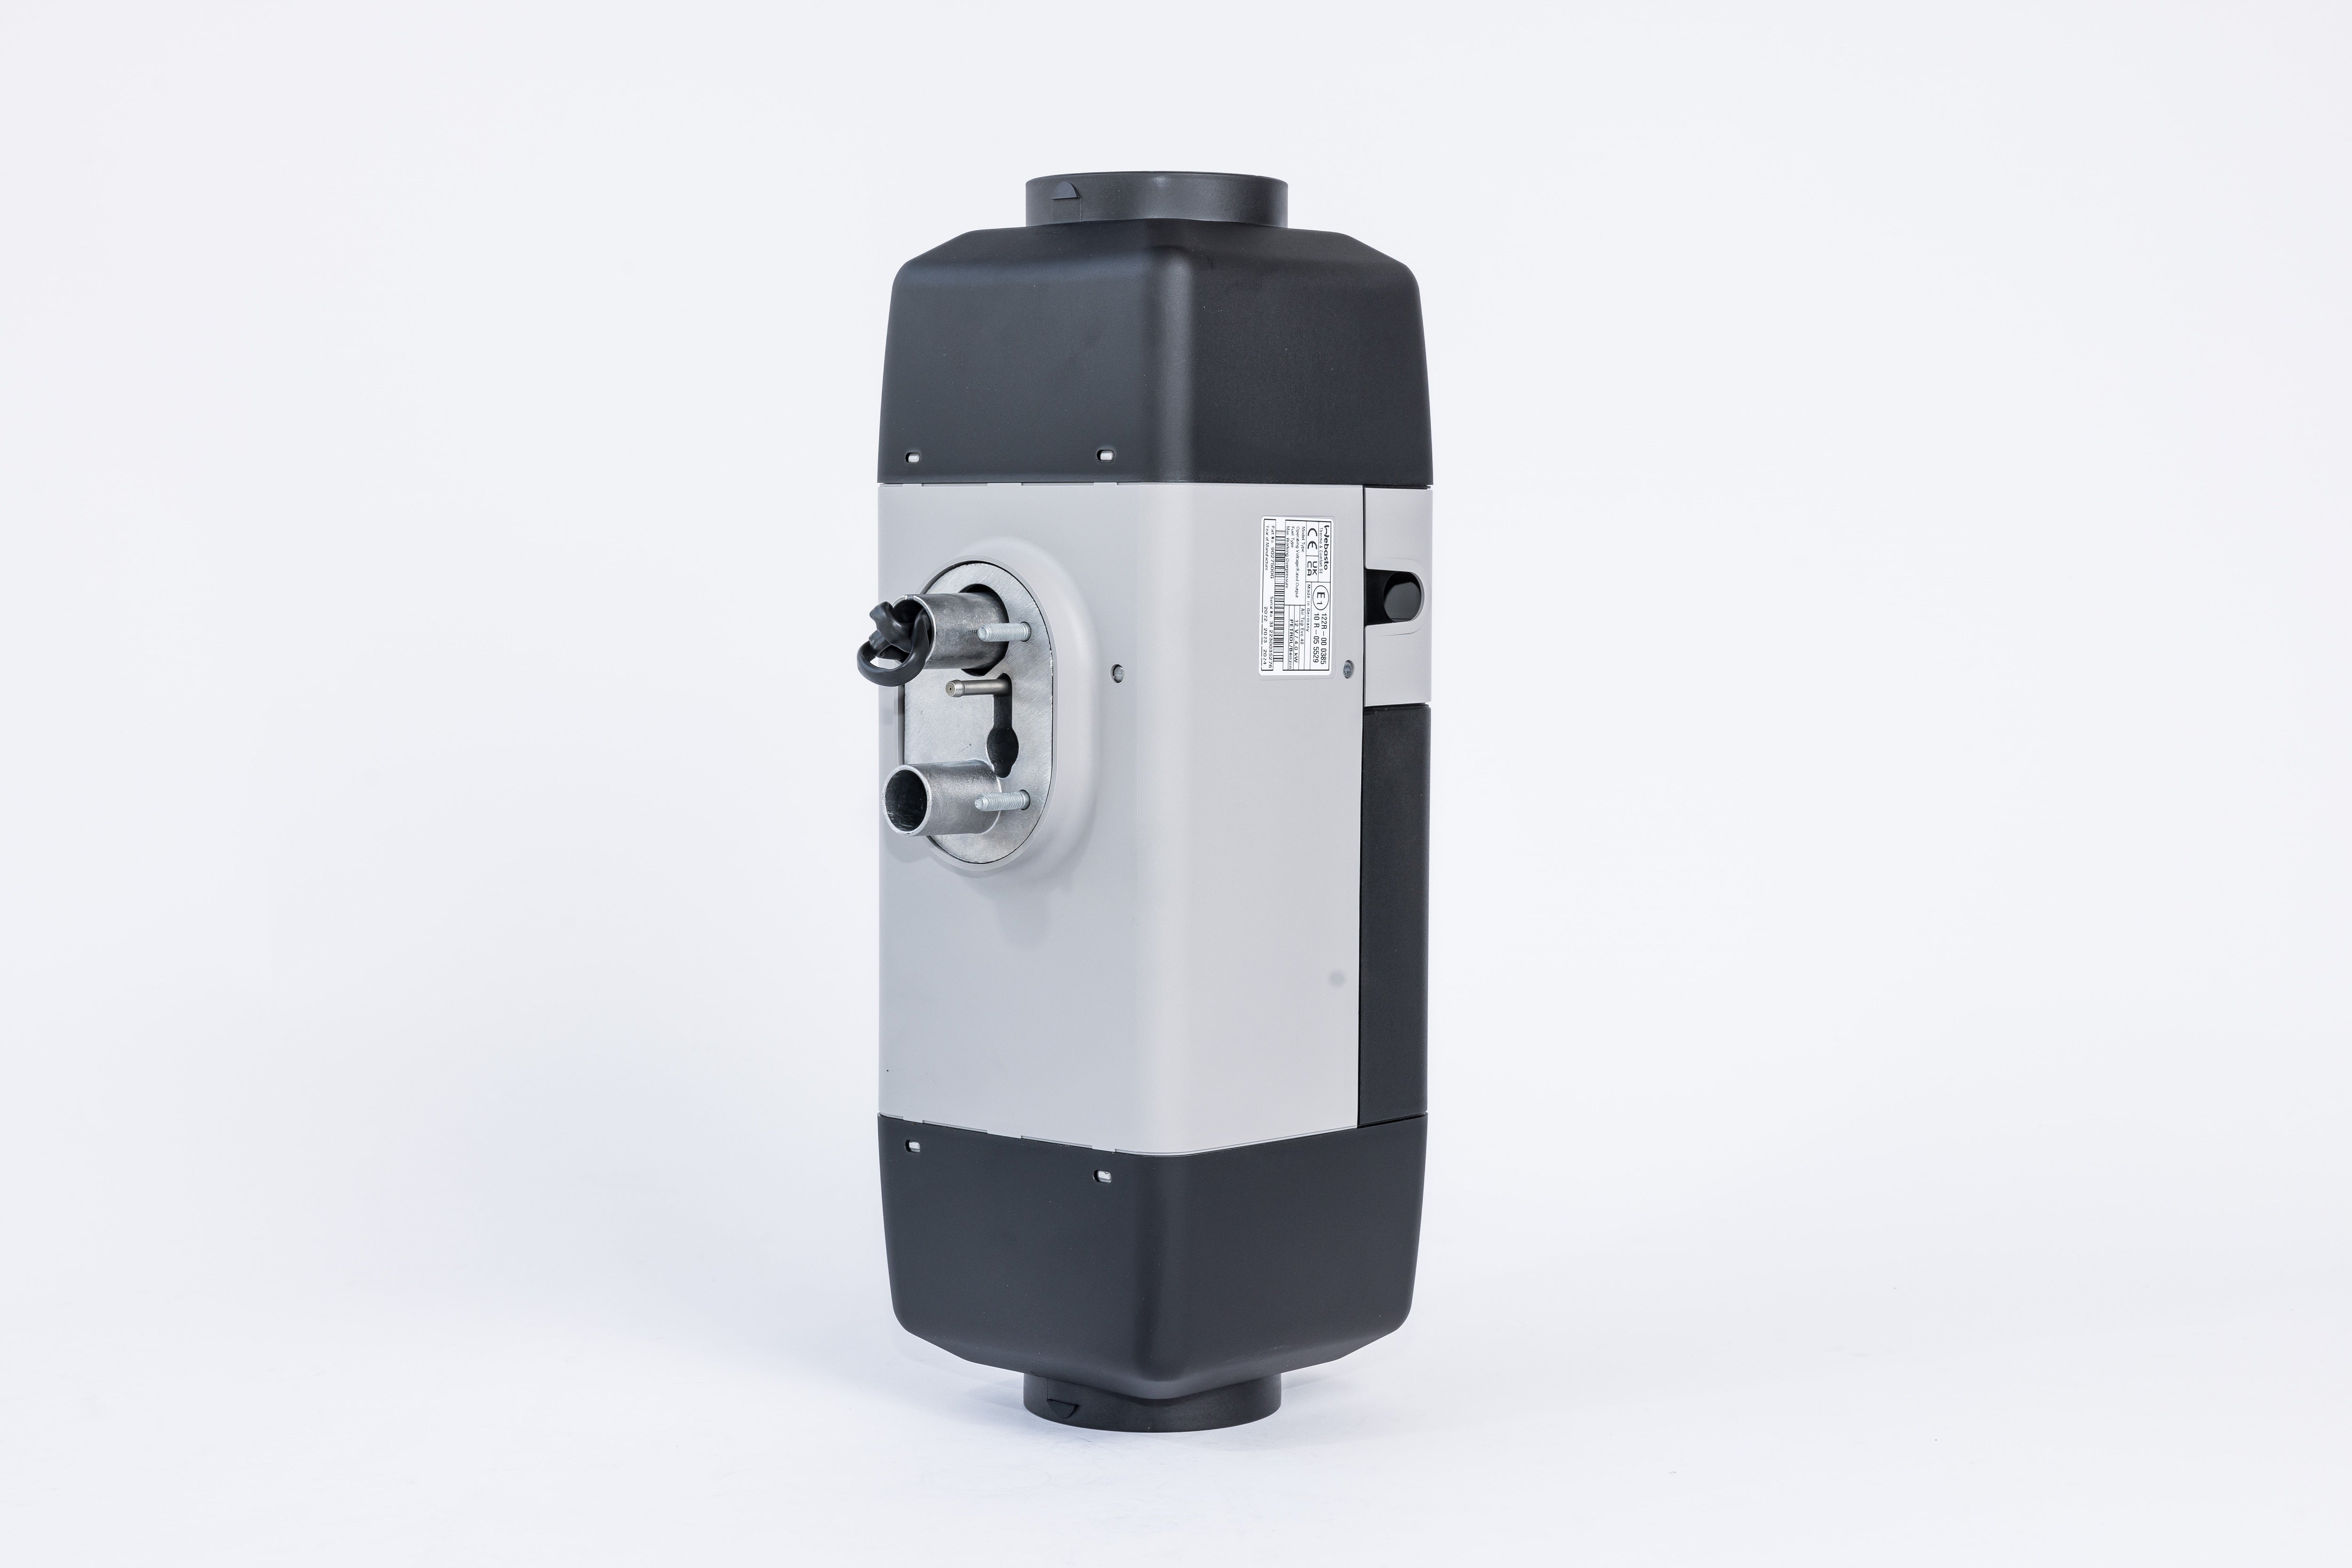 Webasto Air Top EVO 40 12v 4kW Gasoline Heater Smartemp 3.0BT 5014150A